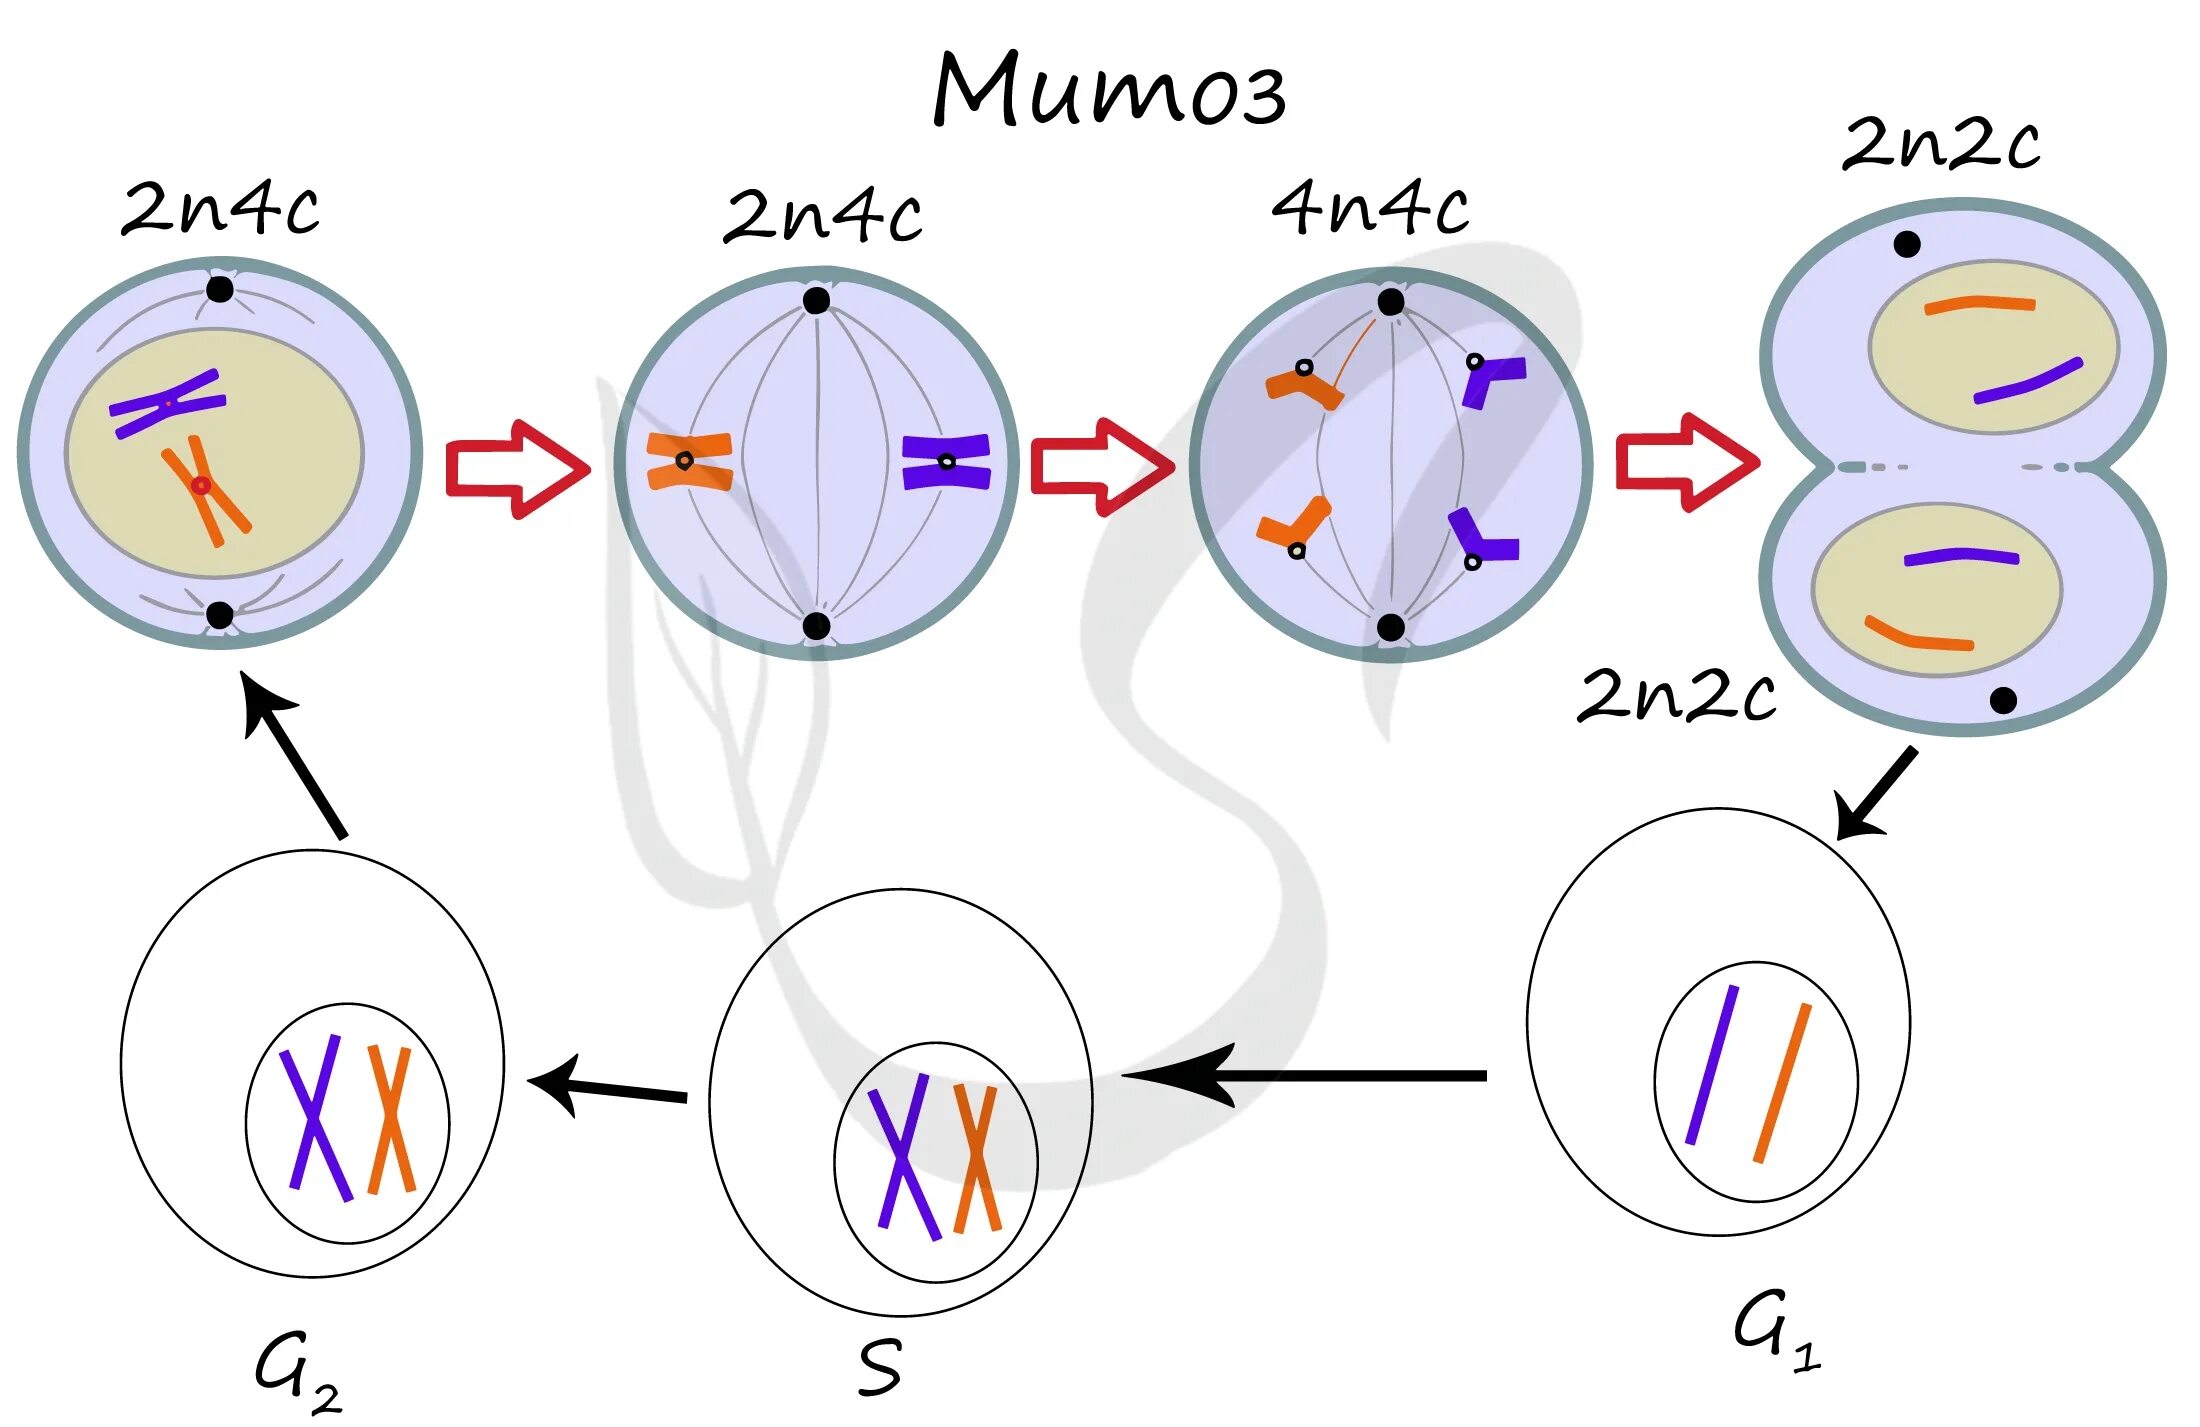 Схема митоза 2n. Схема мейоза для клетки с хромосомным набором 2n 6. Фазы митоза 2n2c. Митоз схема 2n2c.